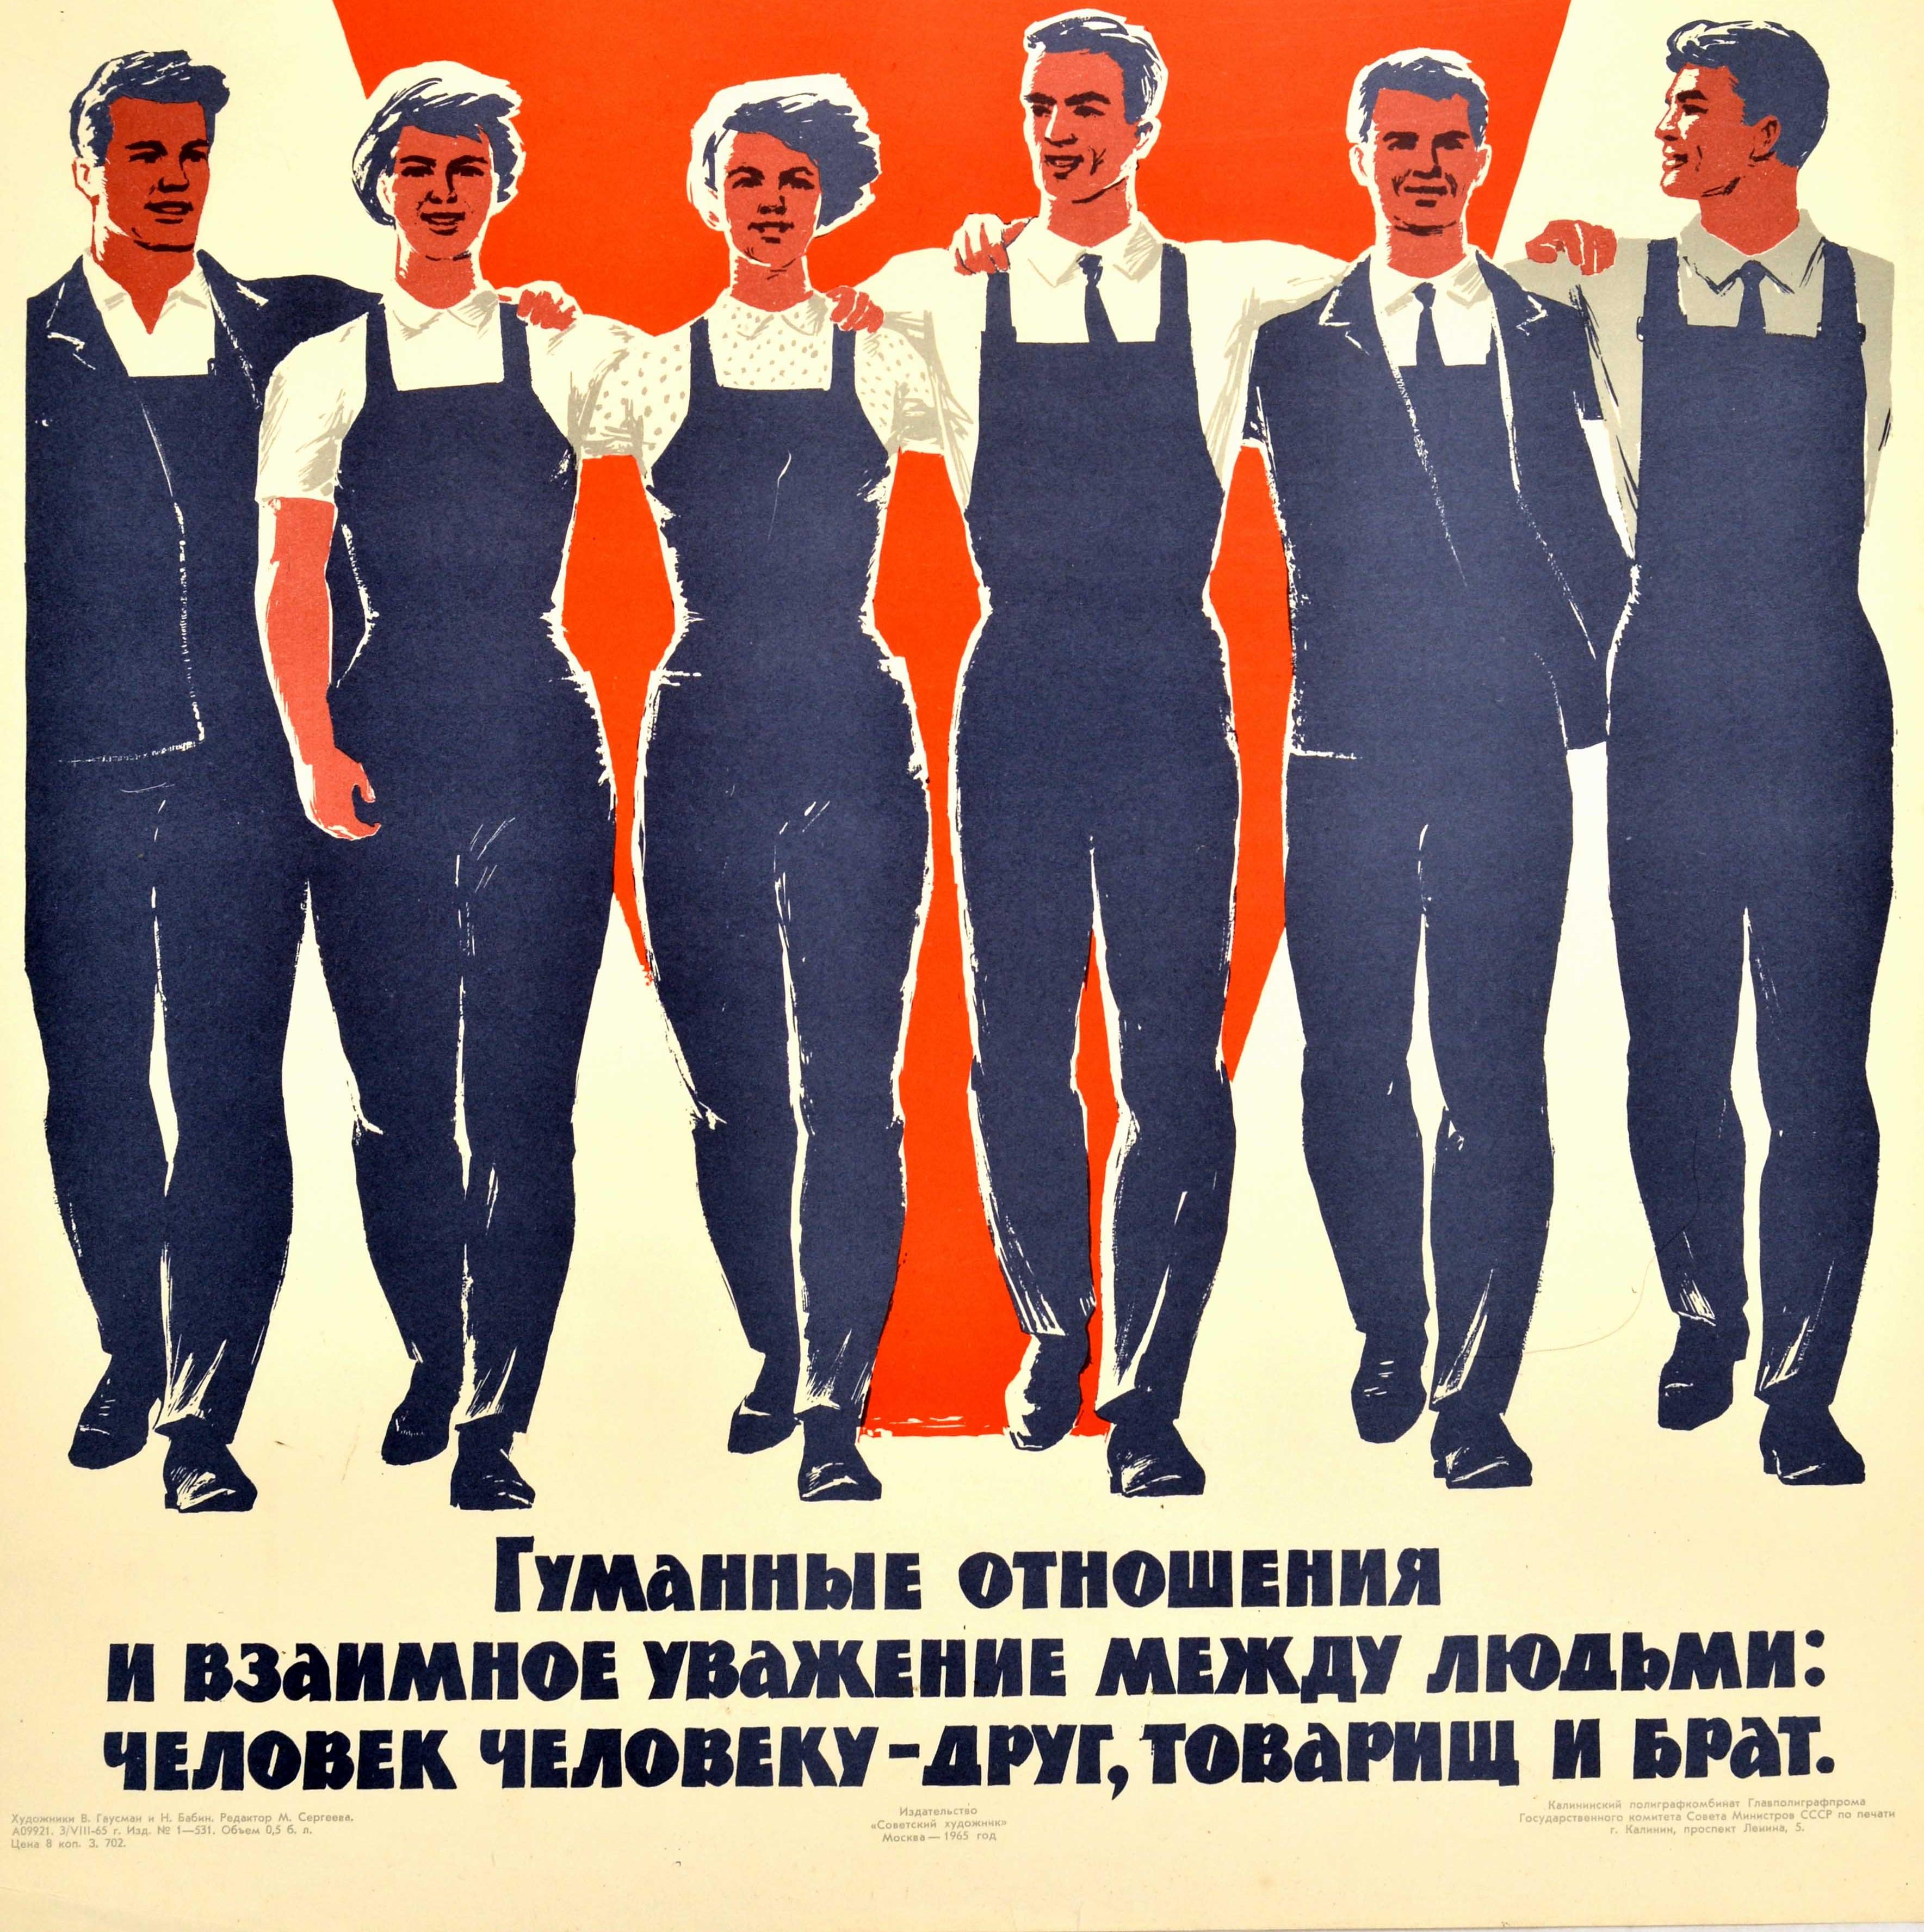 Original Vintage Soviet Poster Workers Team Respect Comrade Workplace Motivation - Print by V. Gausman and N. Babin